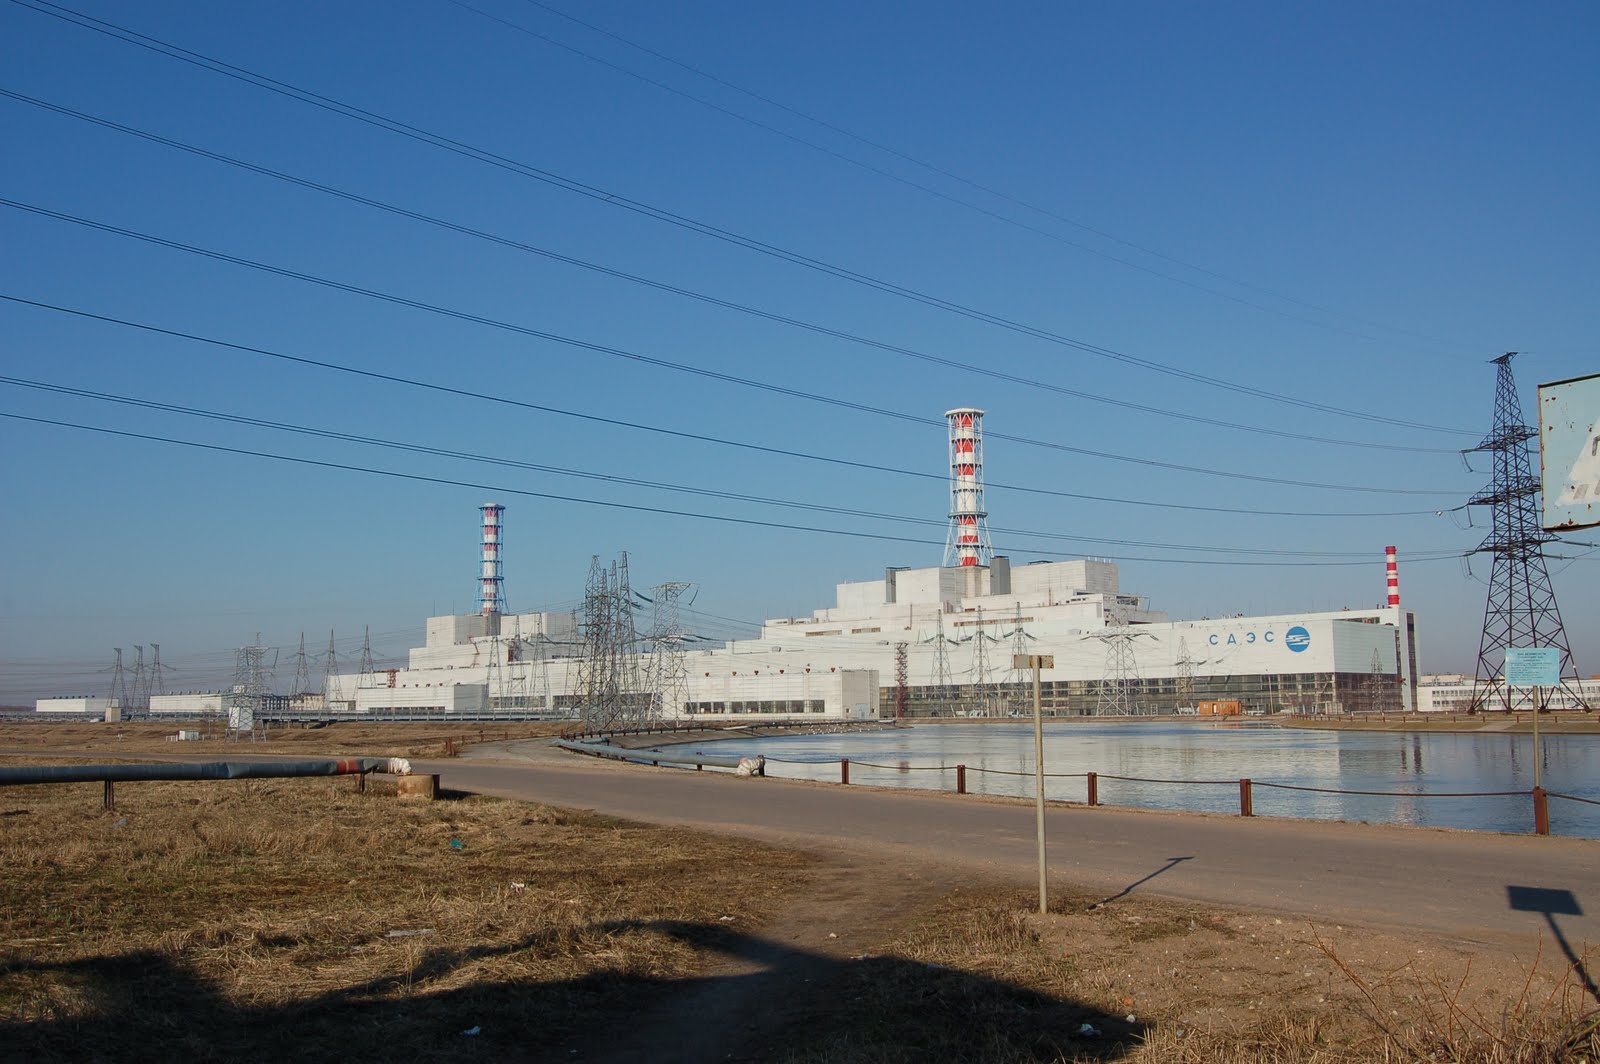 http://1.bp.blogspot.com/-h3wmgbnppuw/TjK6HKvBO6I/AAAAAAAAA4I/gPHomR3nLOg/s1600/Smolensk_Nuclear_Power_Plant.jpg